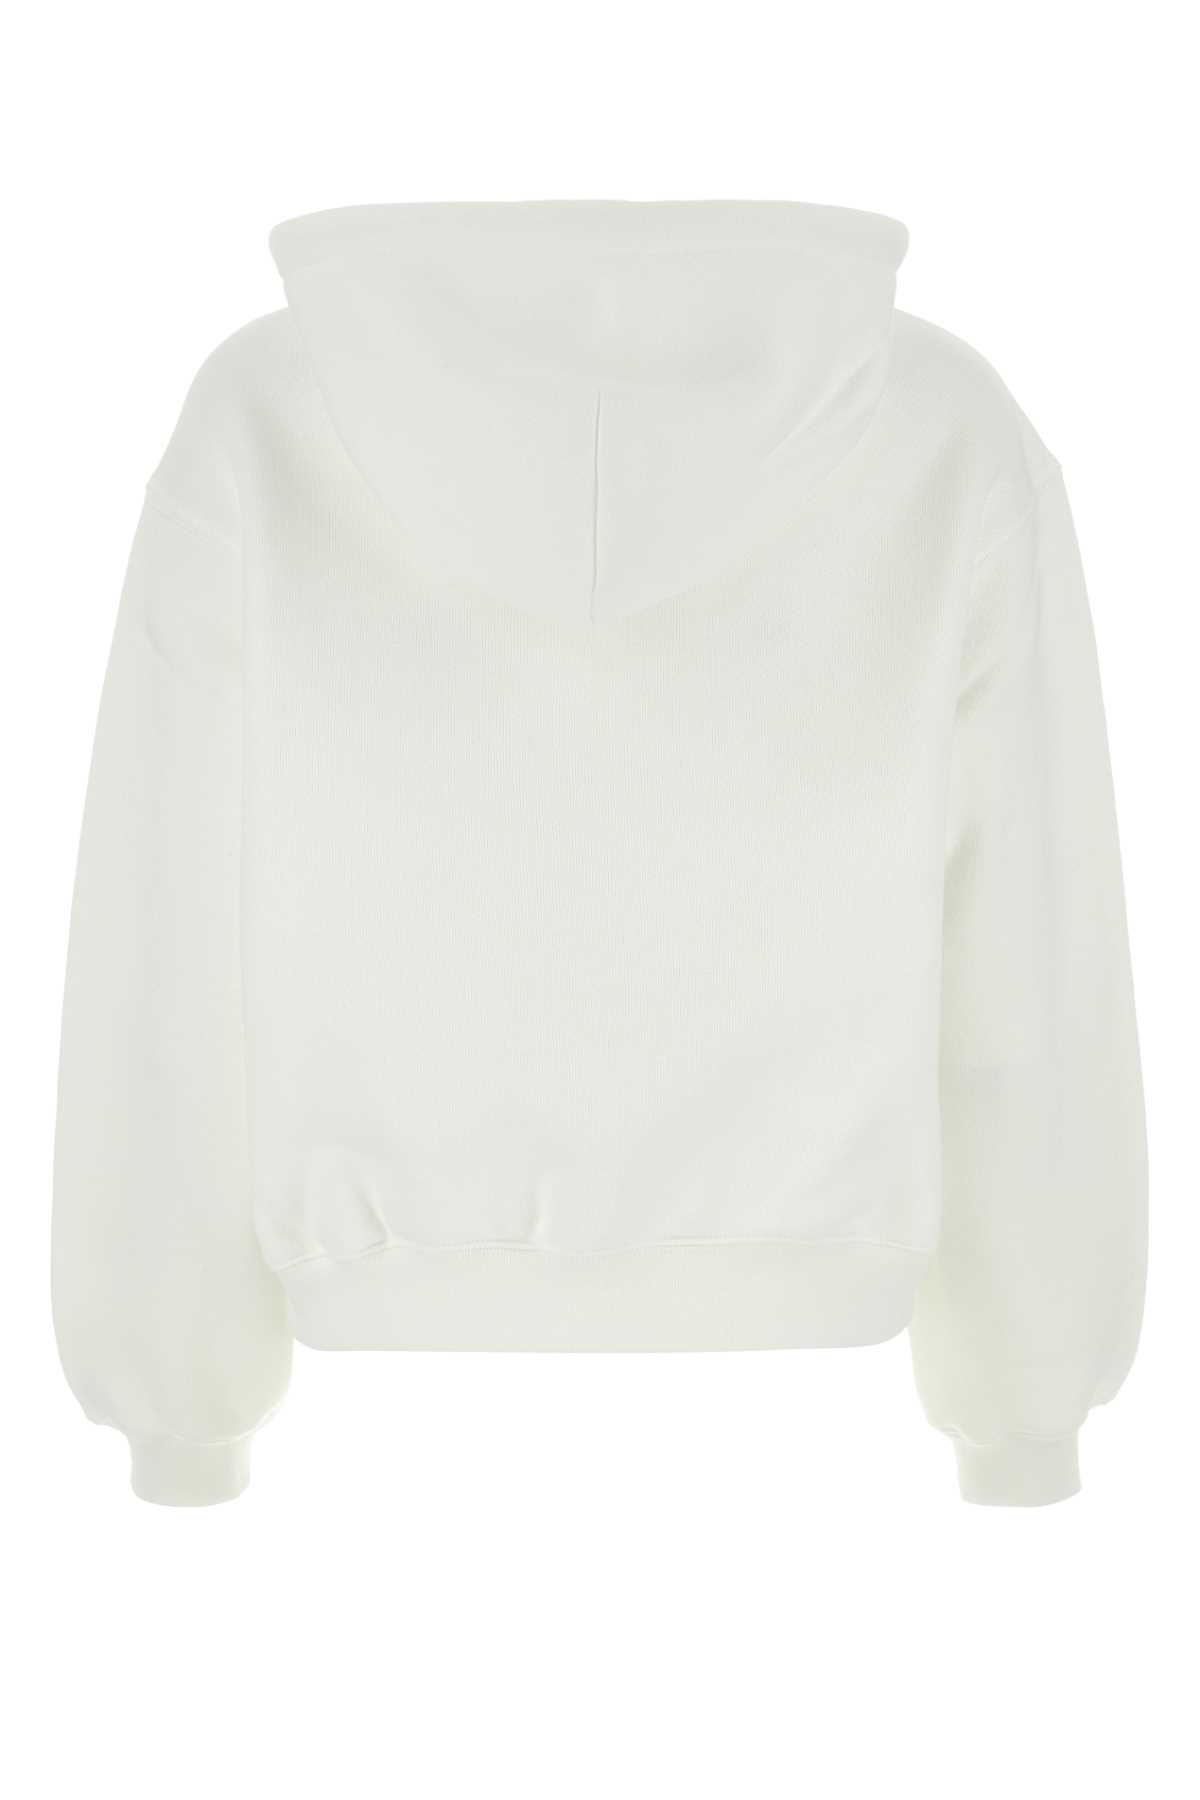 Alexander Wang T White Cotton Blend Oversize Sweatshirt In 100